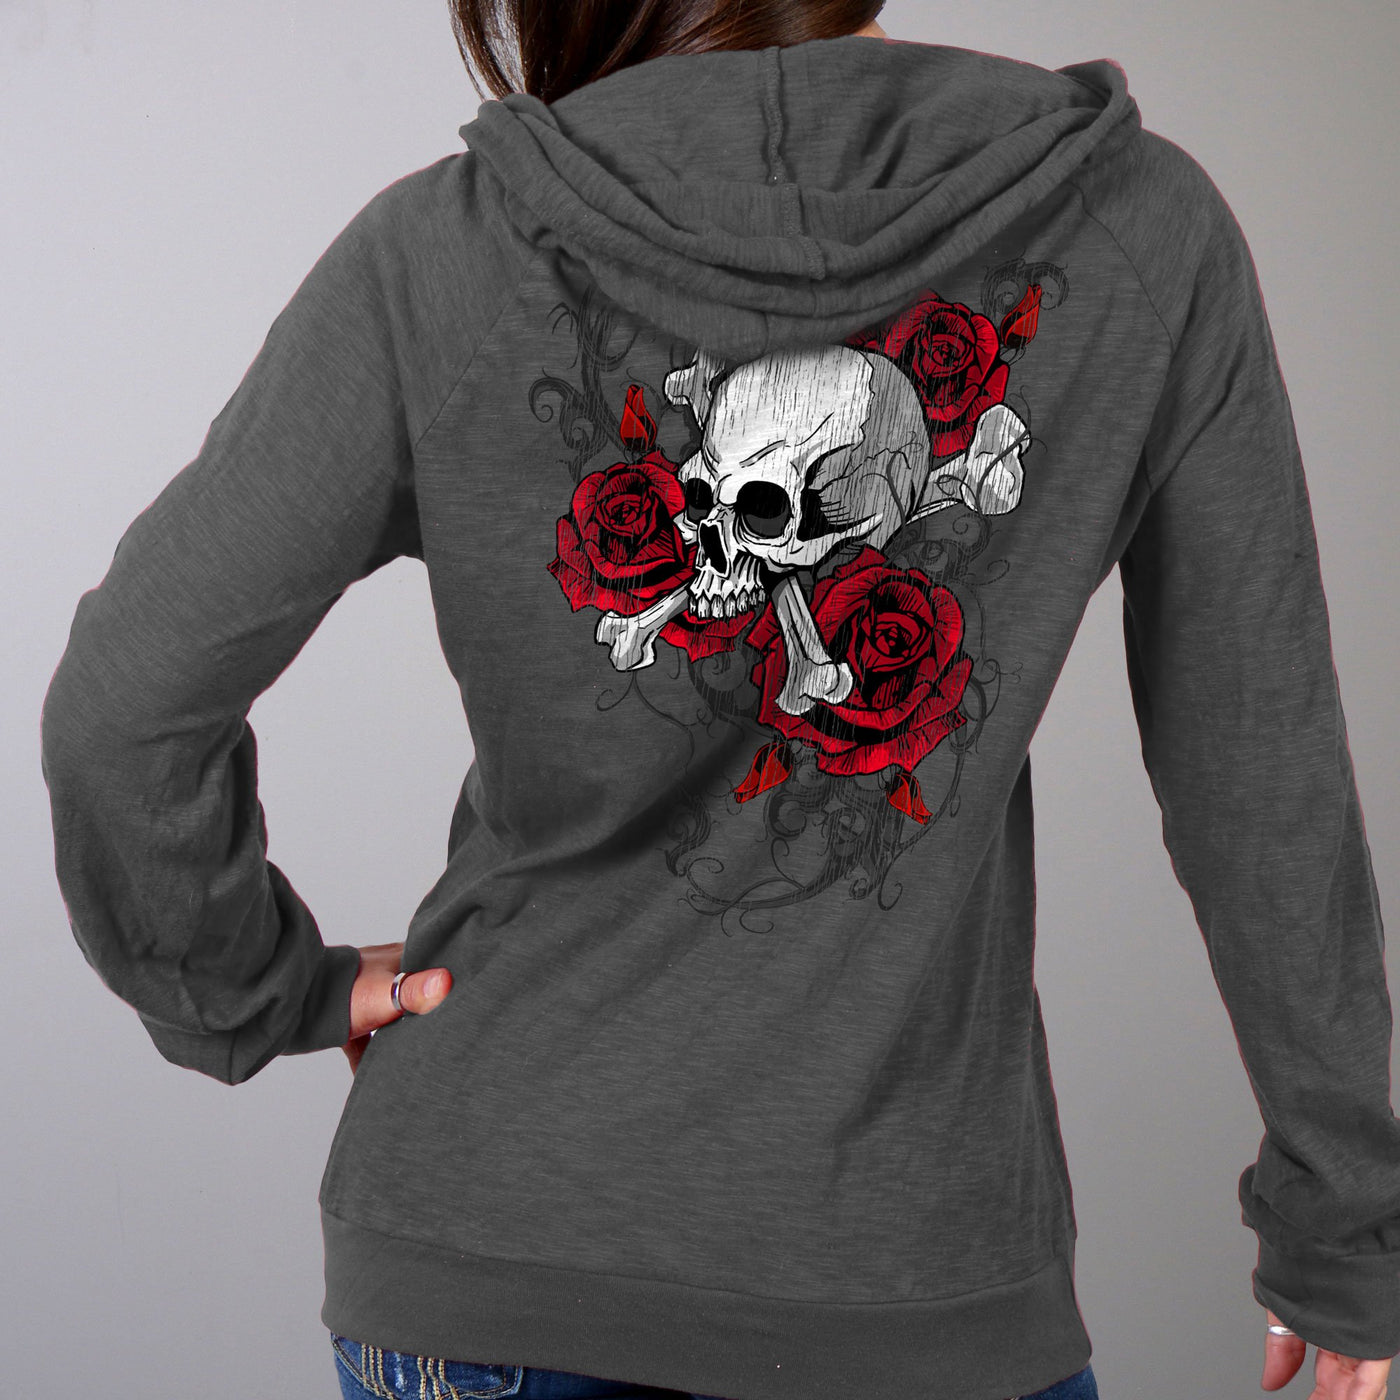 Hot Leathers Women's Sweatshirt Skull Roses